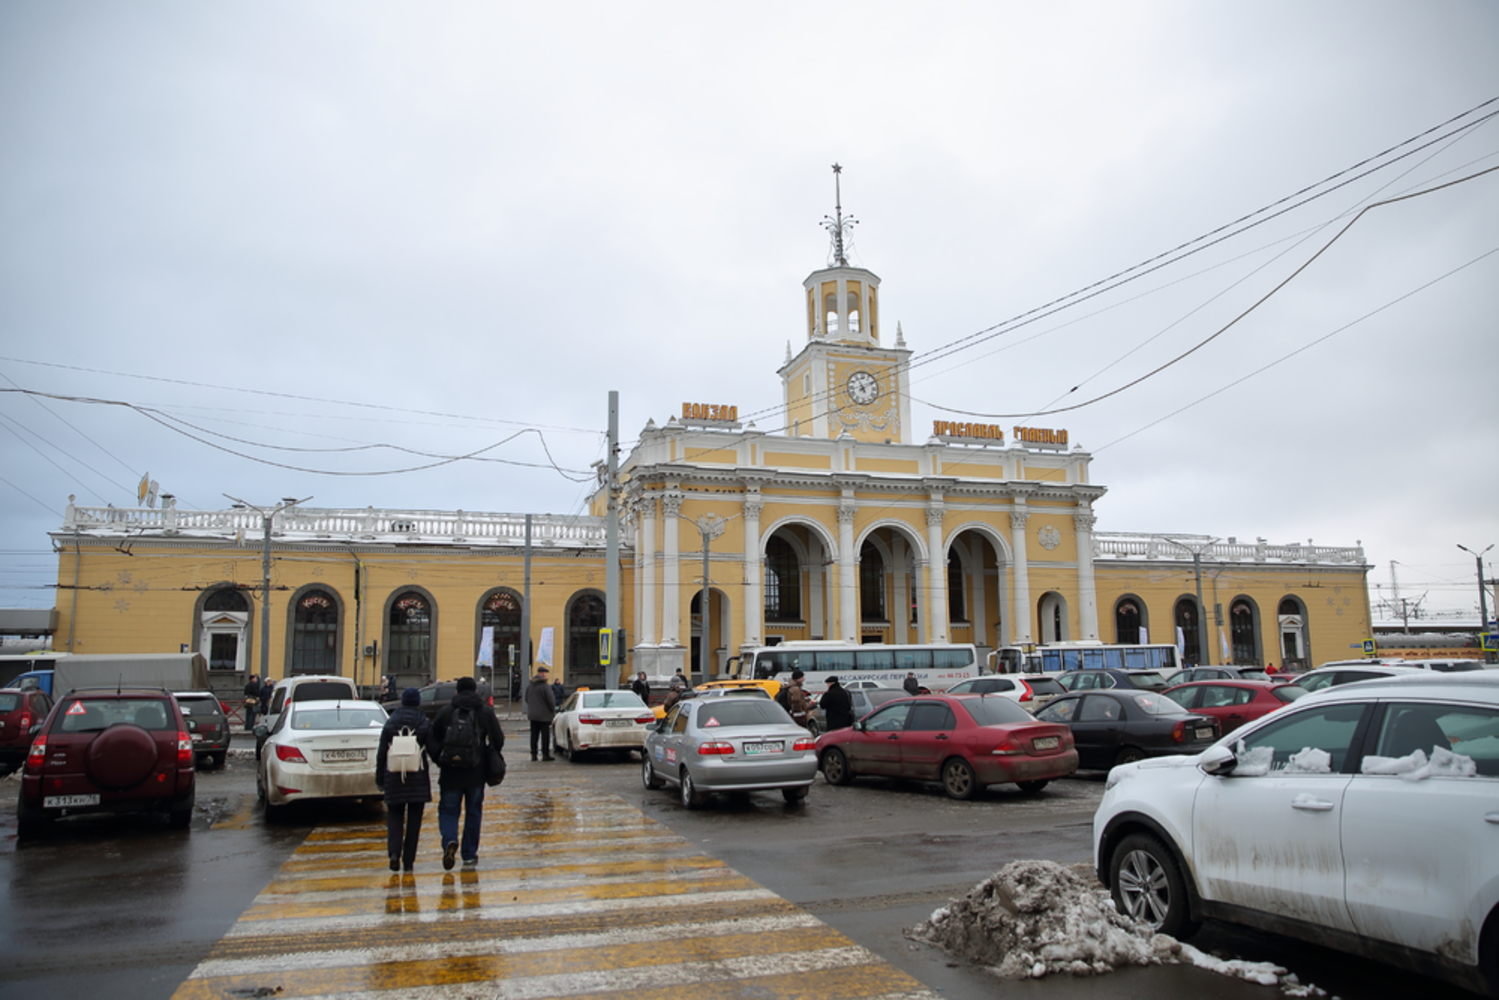 Московский вокзал в ярославле фото